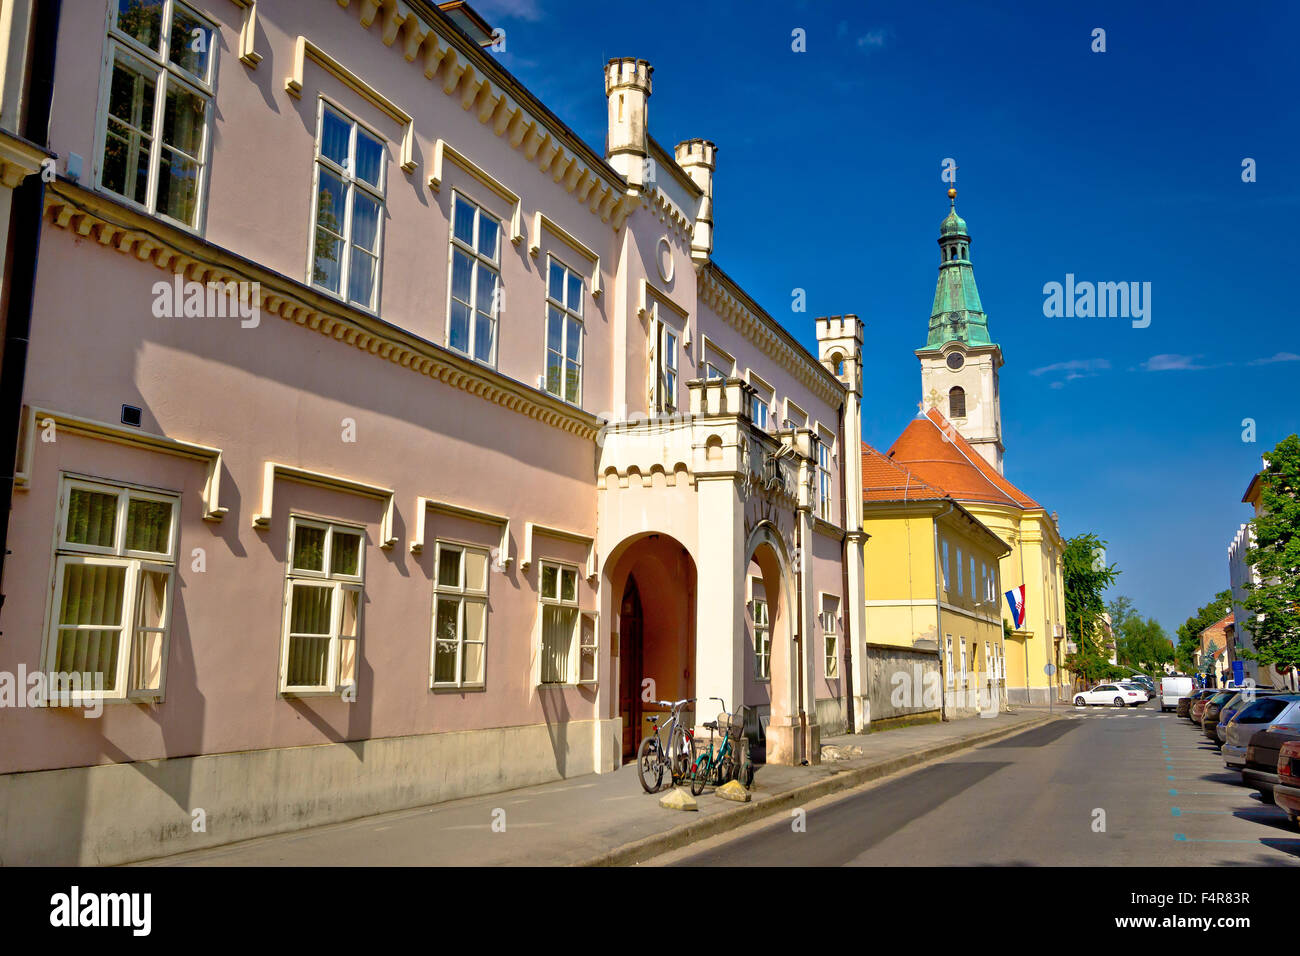 Historic architecture of town Bjelovar, Croatia Stock Photo